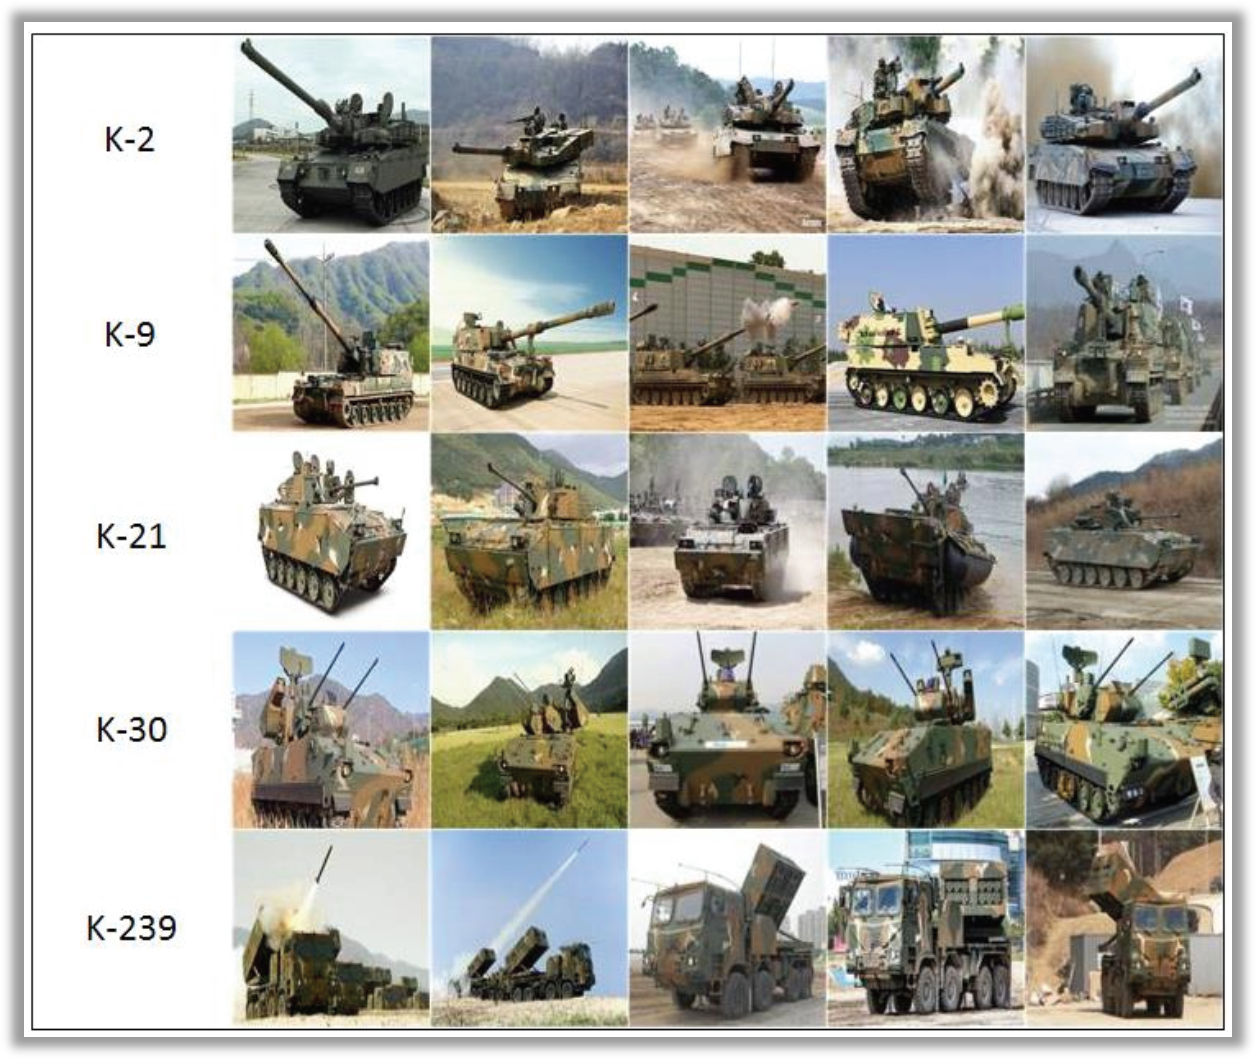 Representative ground weapon systems in ROK(Republic of Korea)